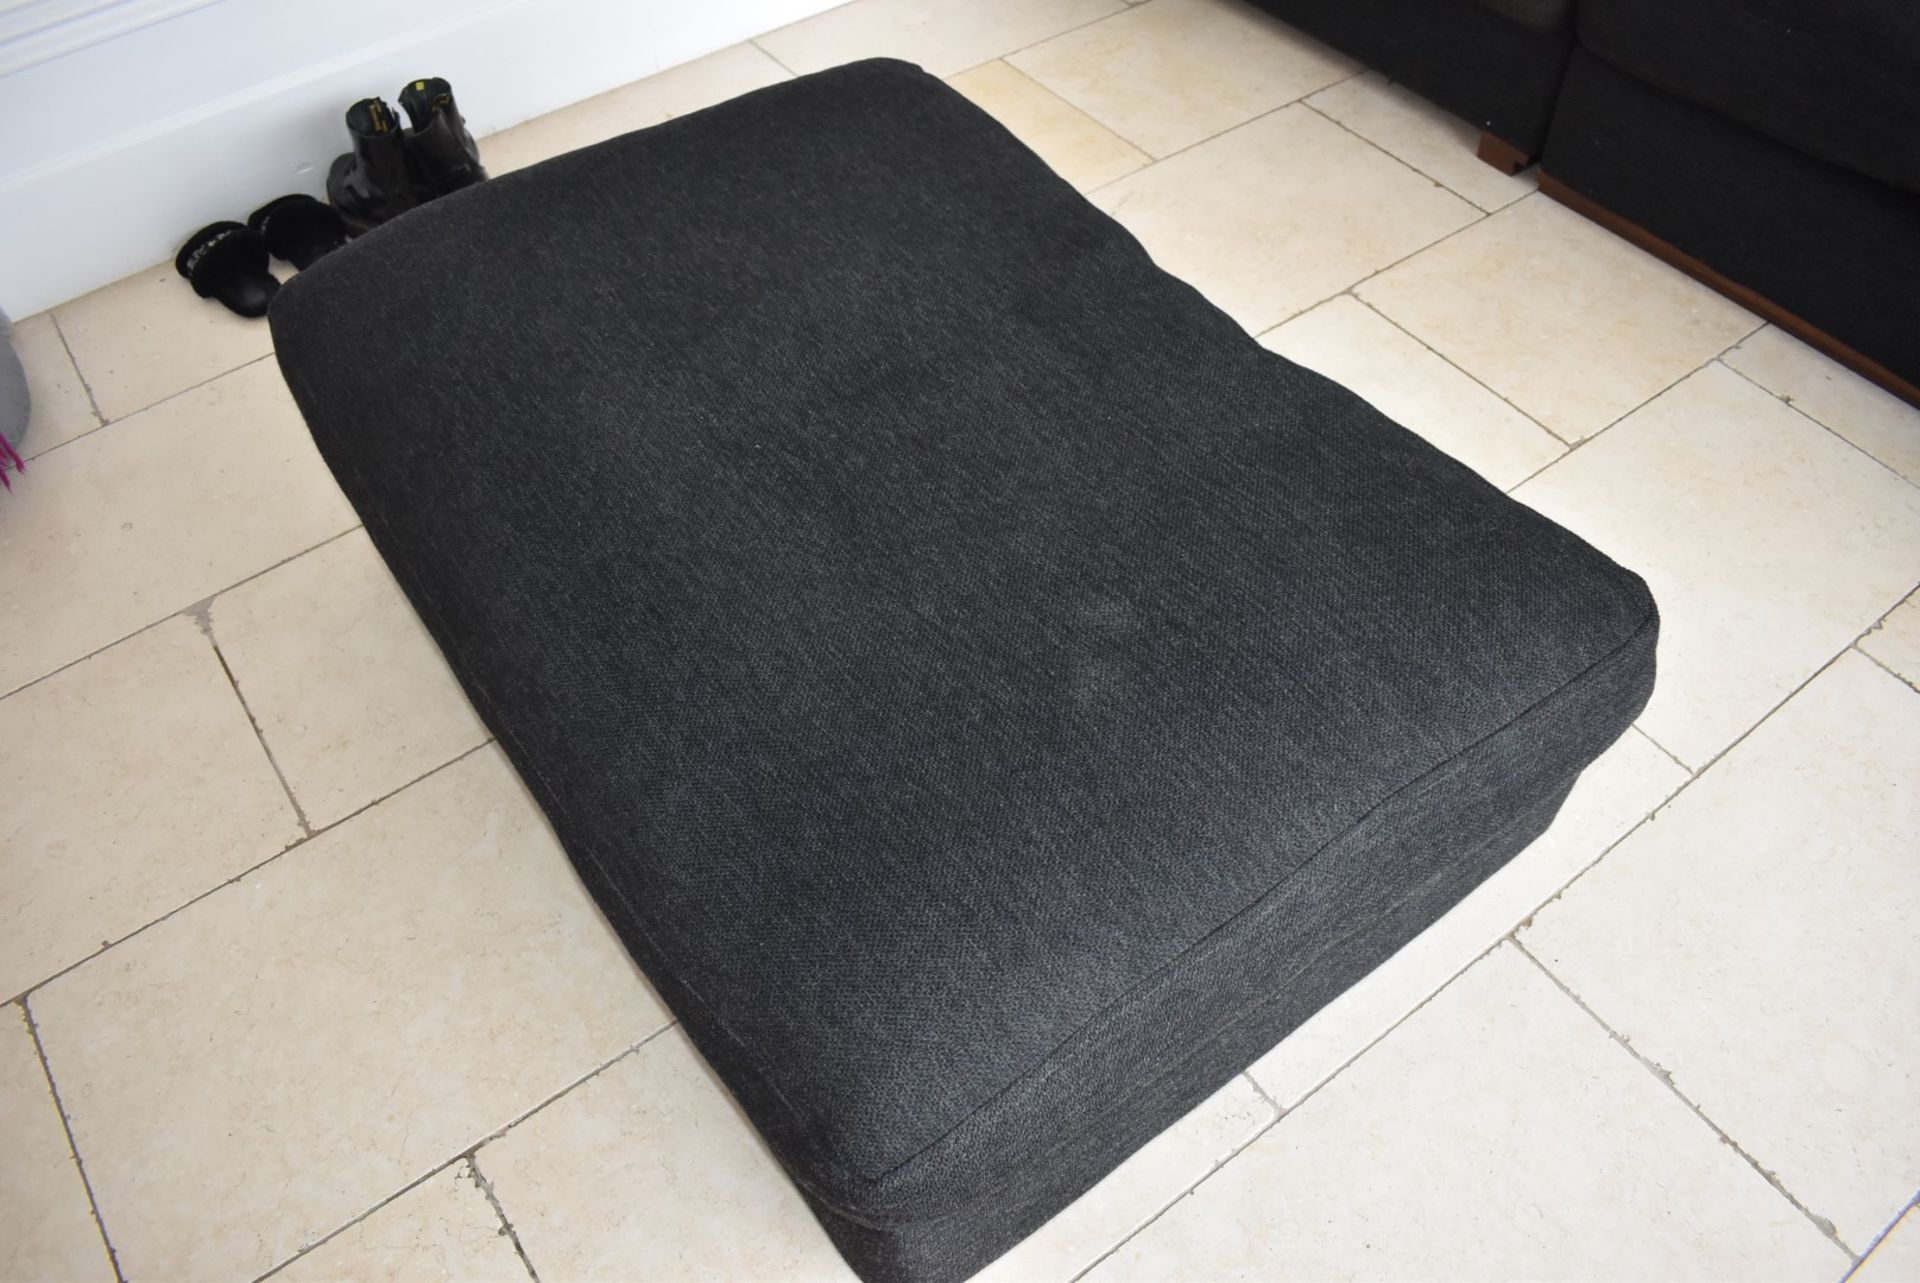 1 x Large Corner Sofa Upholstered in Dark Grey Grey Fabric - Inc Footstool - NO VAT ON THE HAMMER! - Image 9 of 15